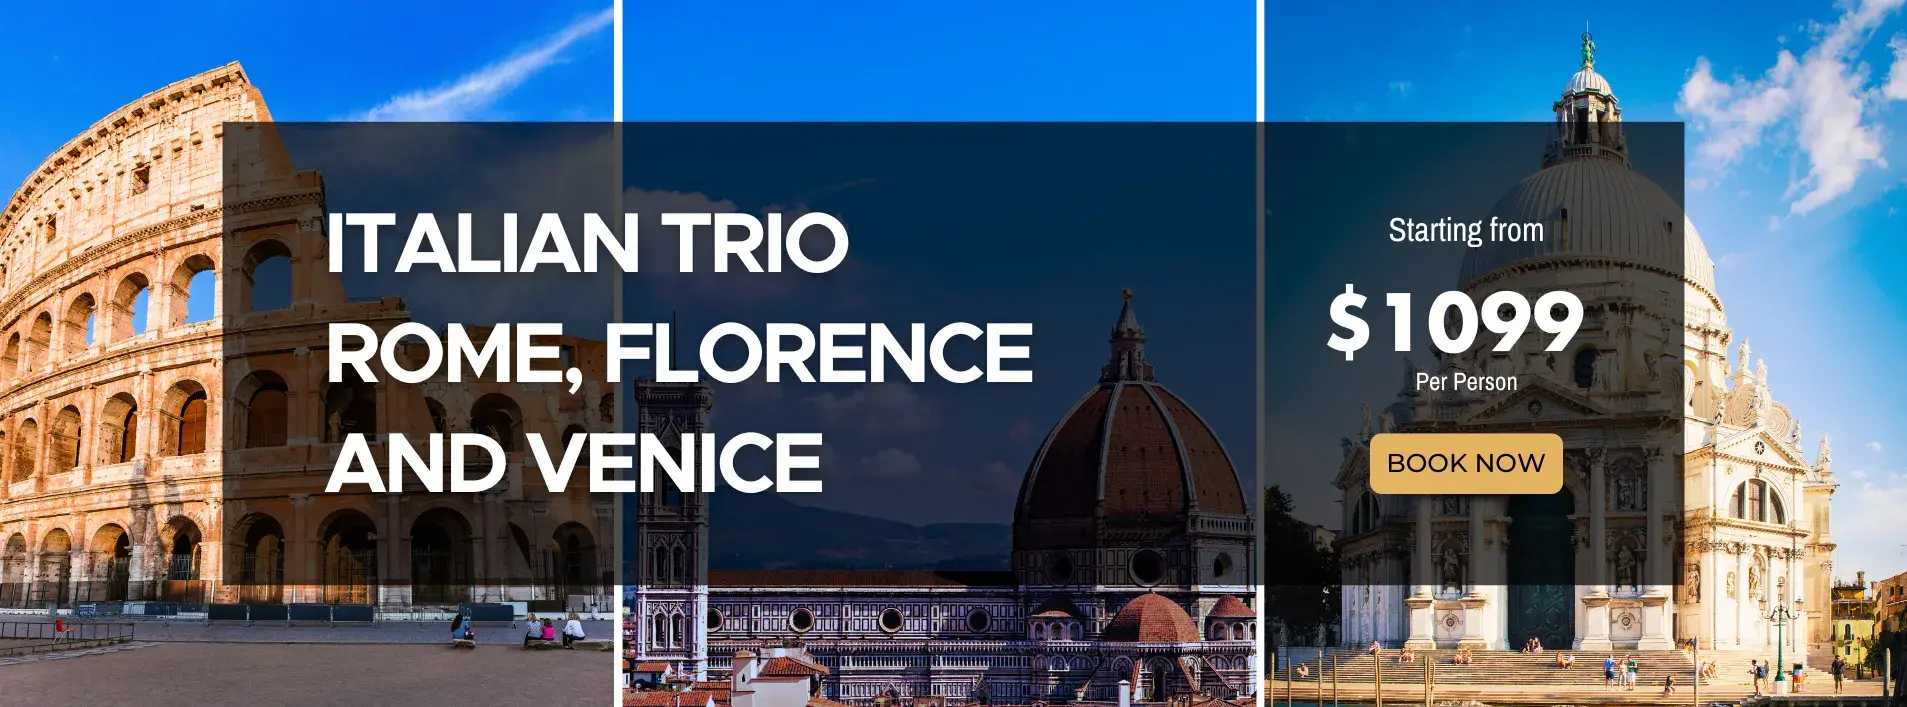 Italian Trio Rome, Florence and Venice